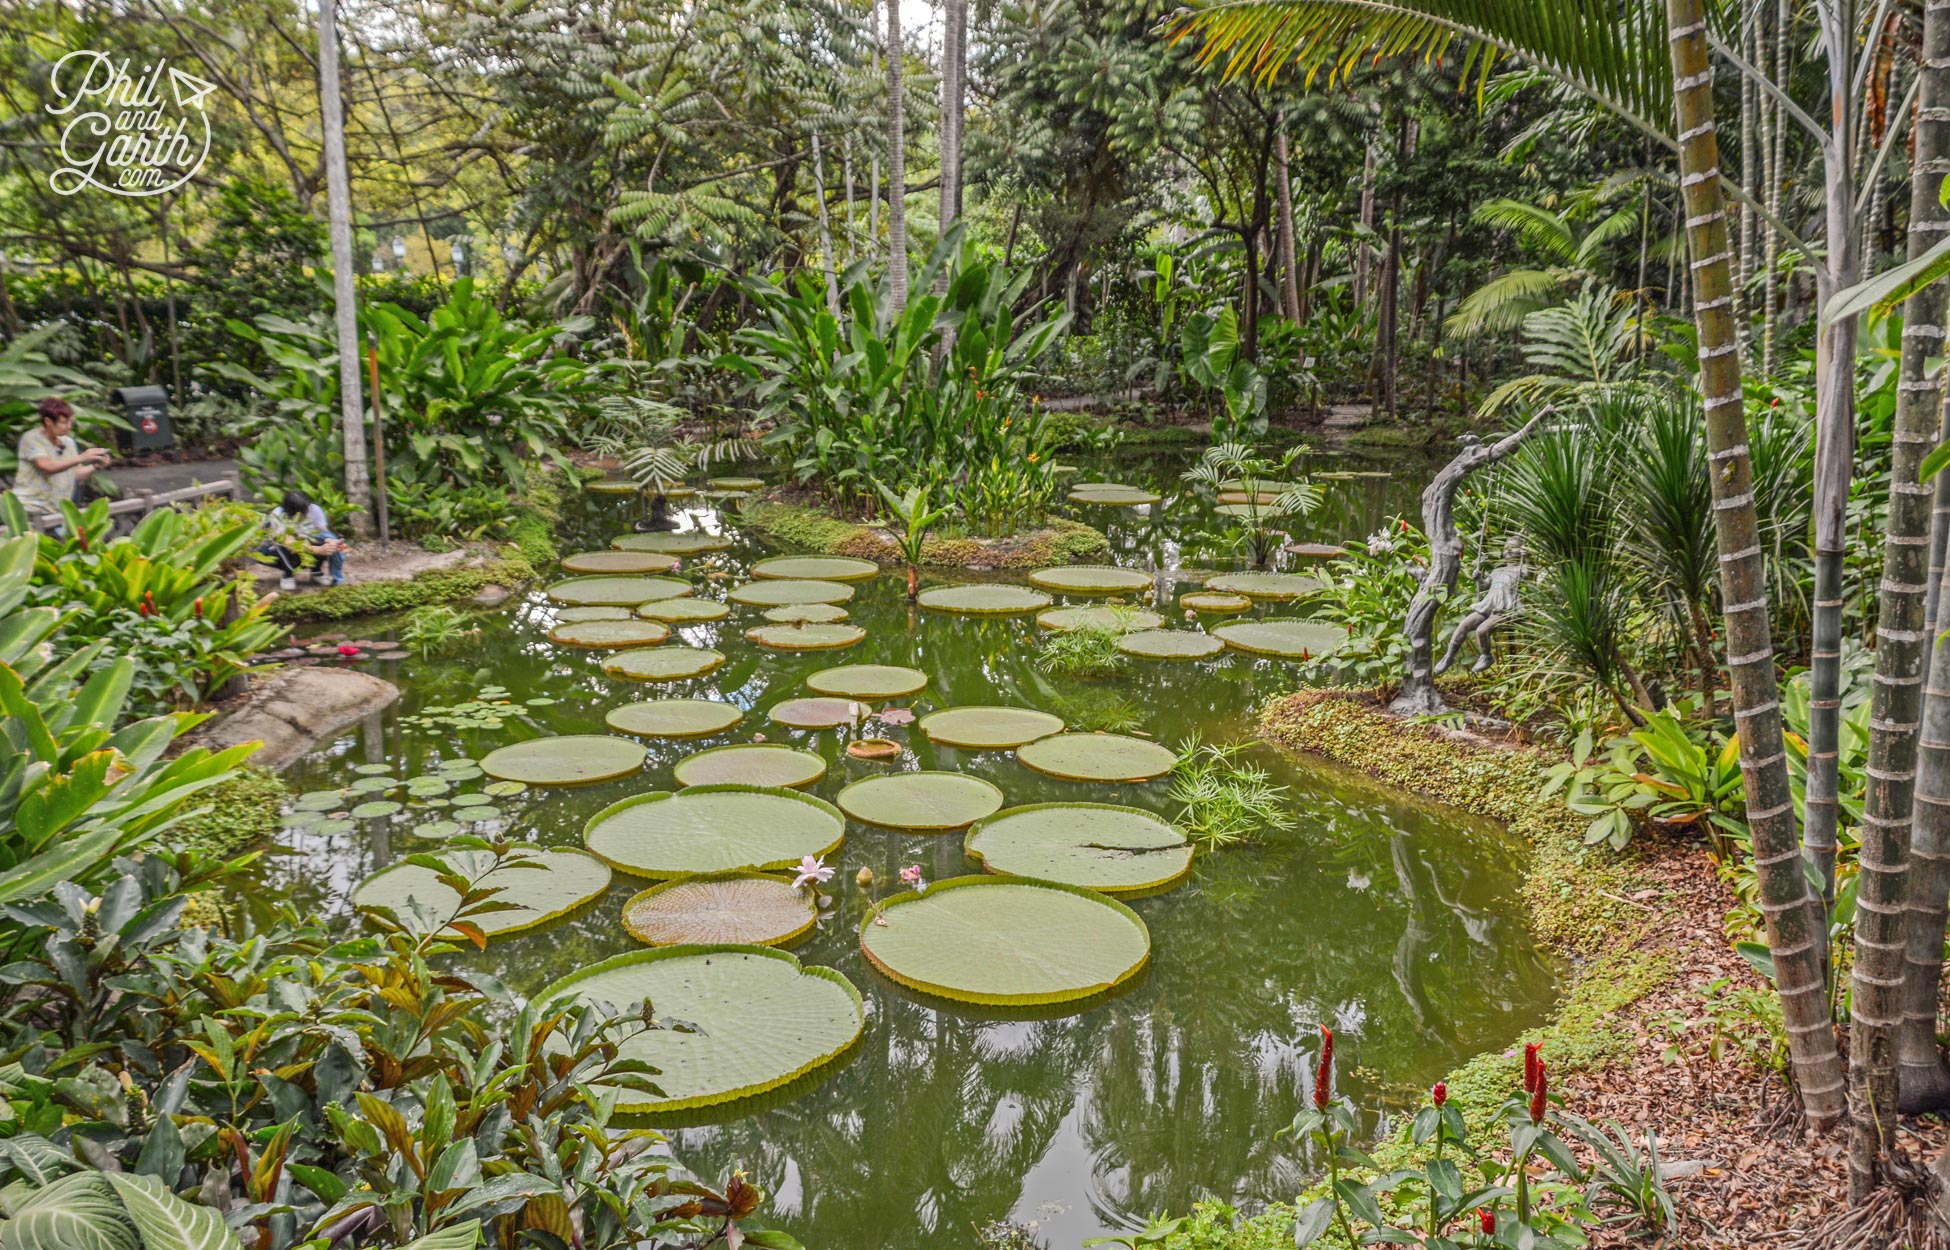 Singapore Botanic Gardens - A UNESCO World Heritage Site